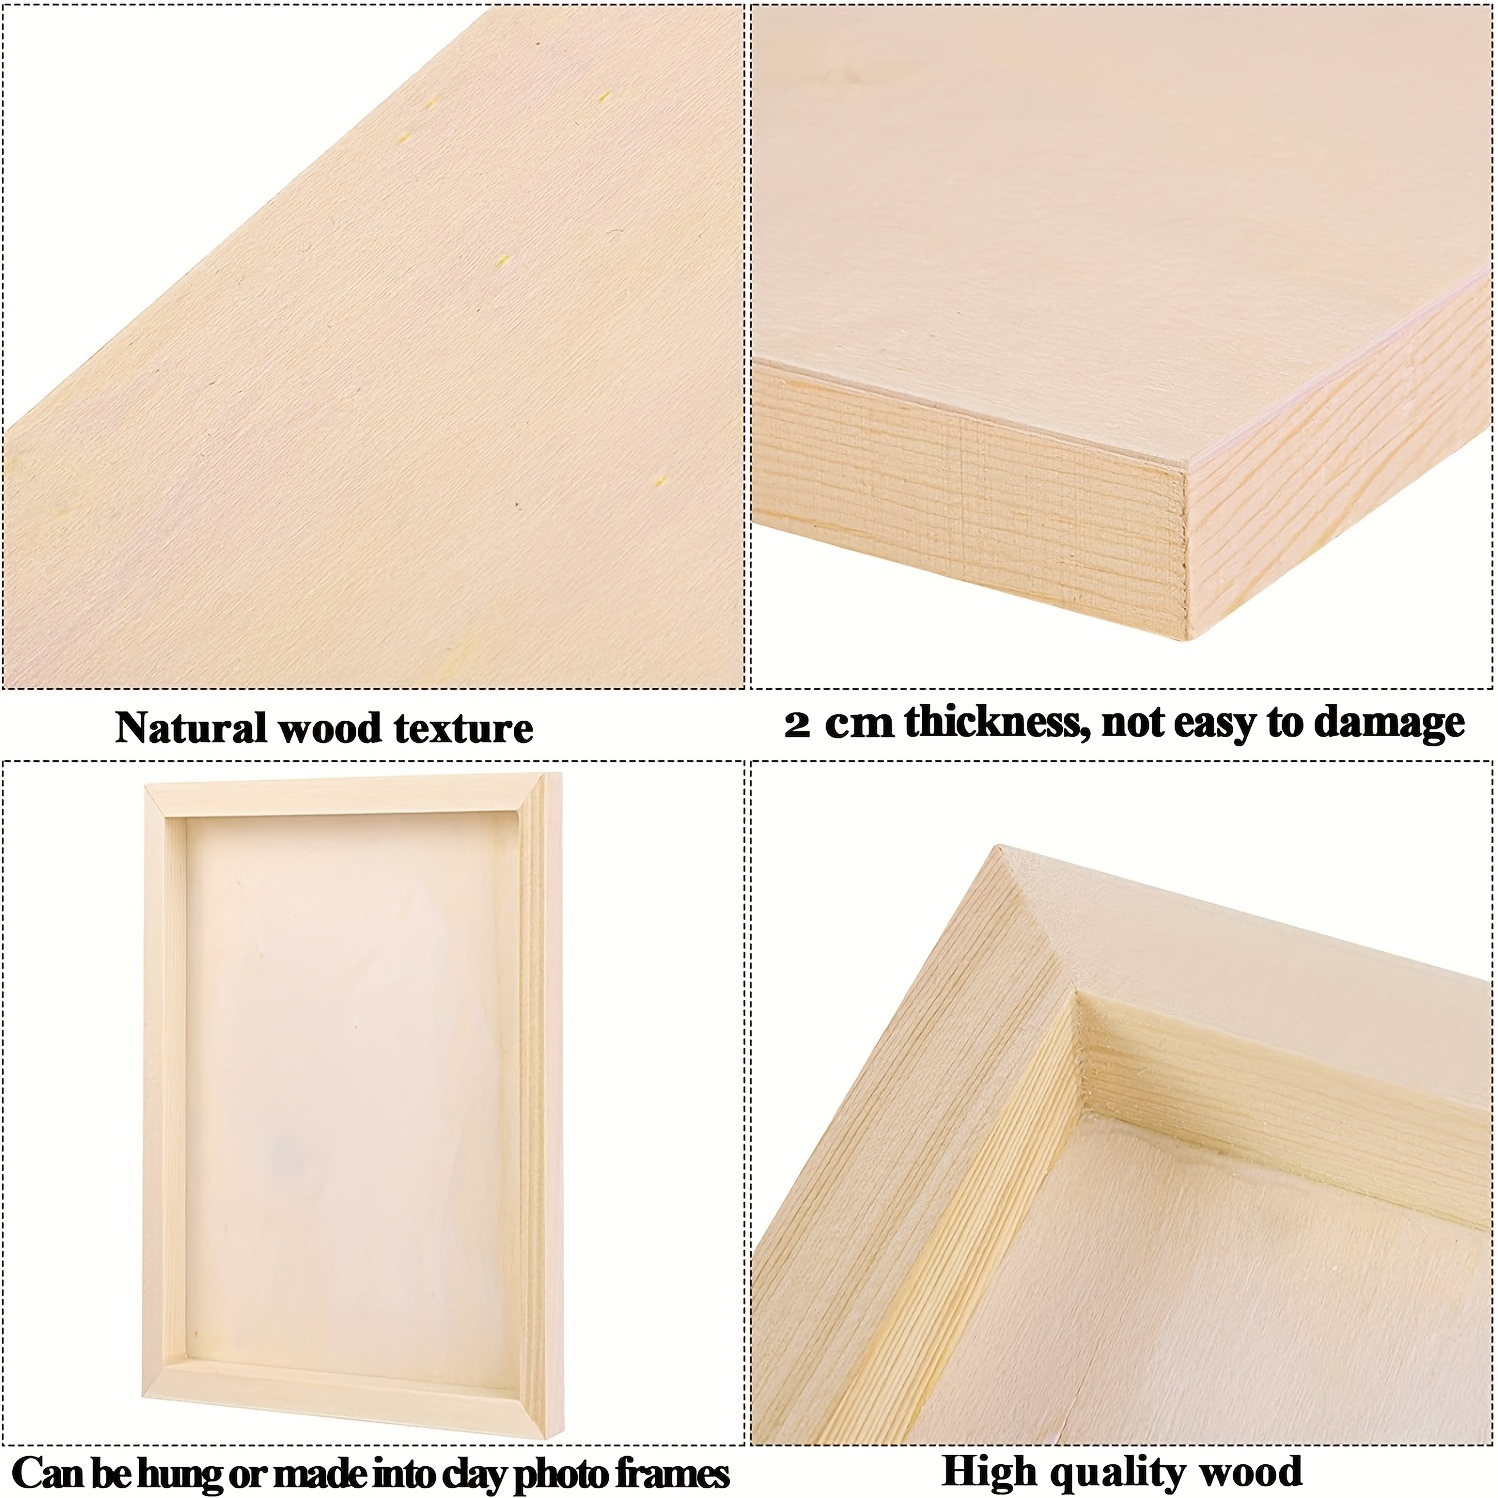 Paquete de 6 tableros de lona de madera sin terminar para pintar, paneles  cuadrados de madera de 6 x 6 pulgadas para manualidades